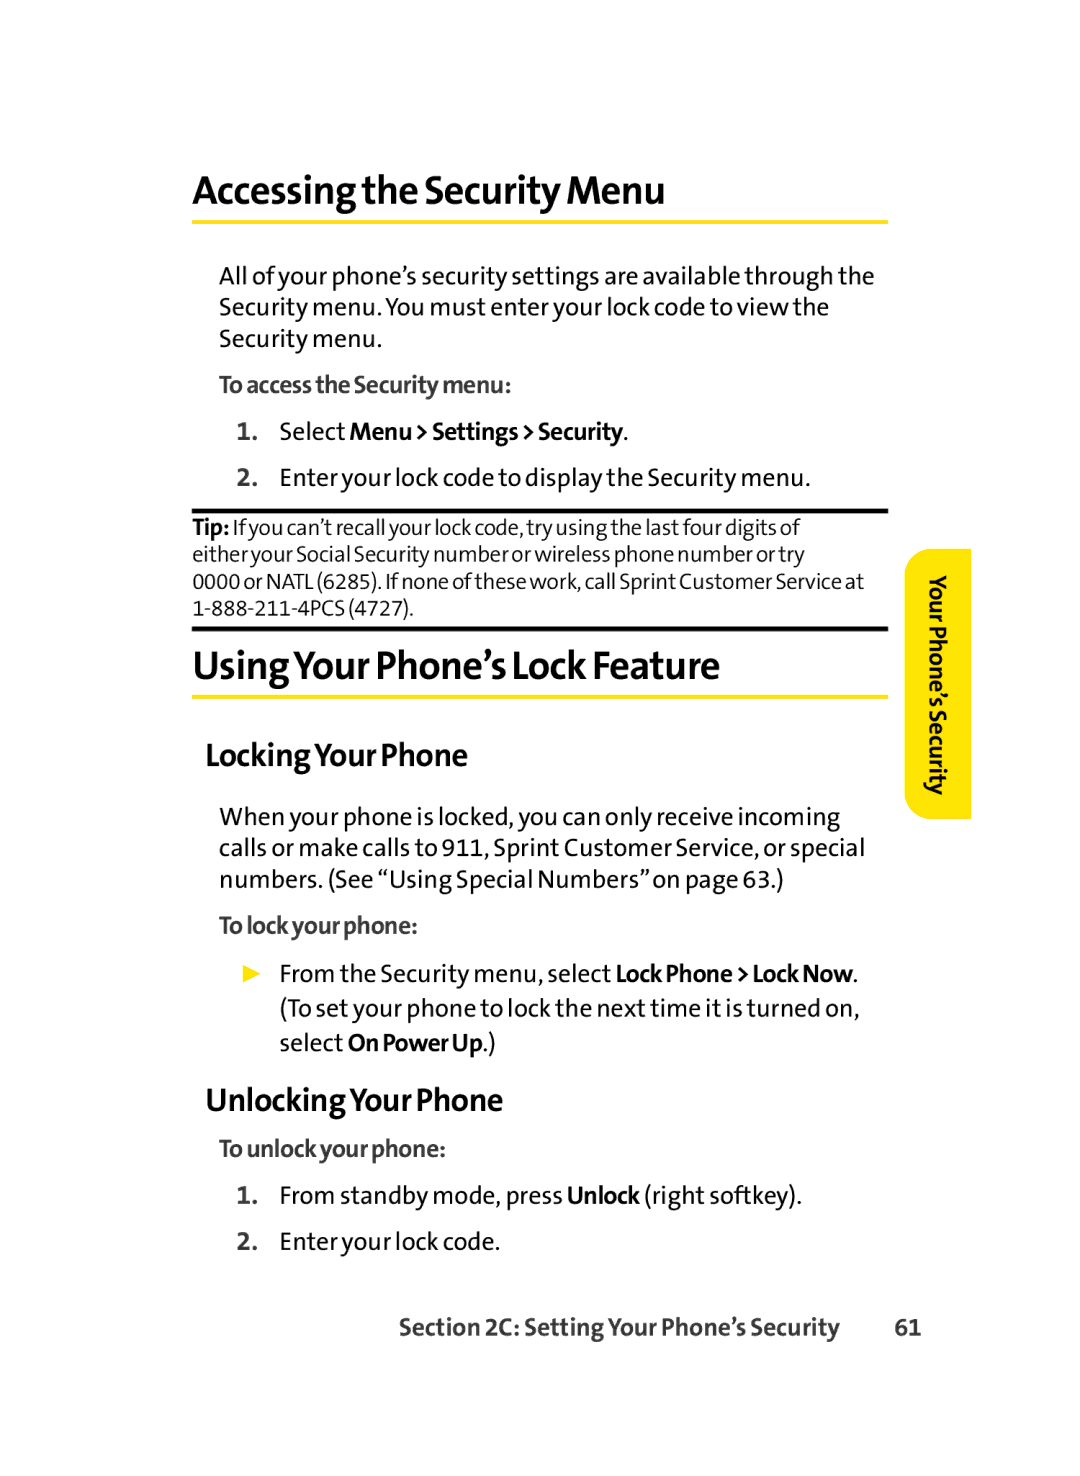 Sprint Nextel LX350 Accessing the Security Menu, UsingYour Phone’s Lock Feature, LockingYour Phone, UnlockingYour Phone 